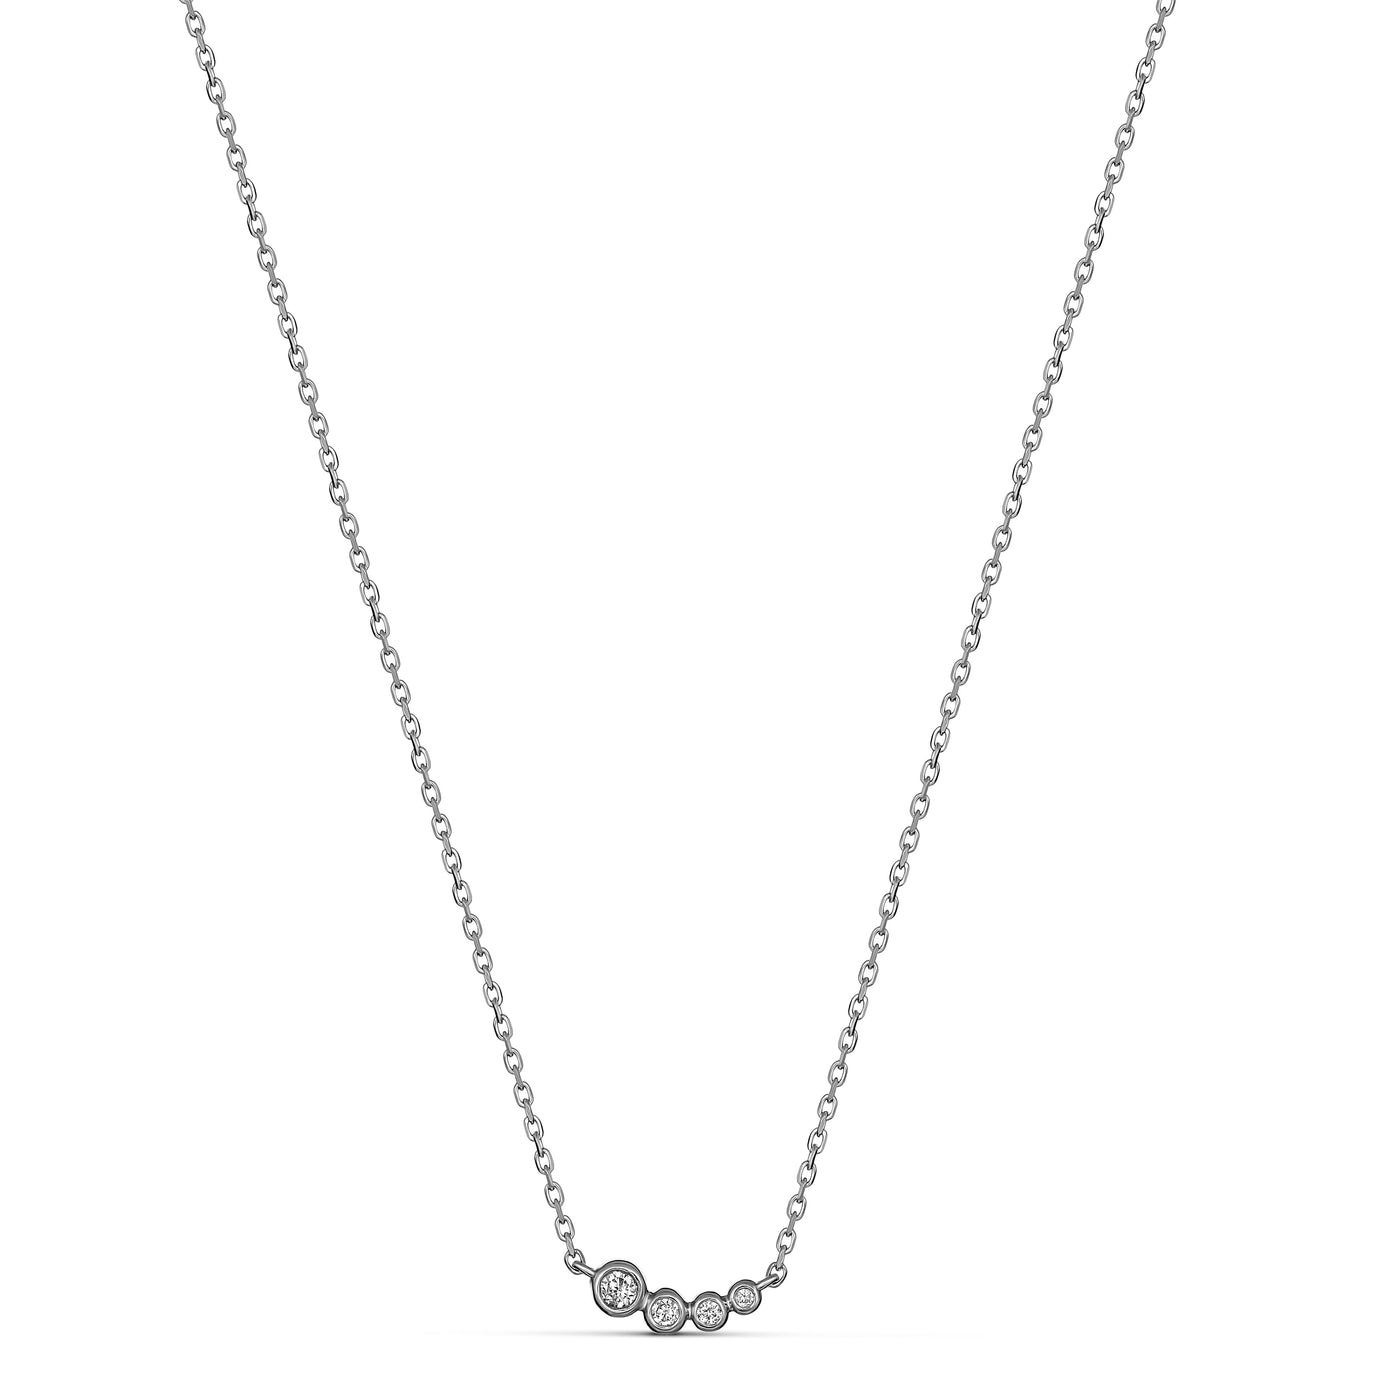 9ct gold bezel set diamond necklace featuring 4 graduating bezel set diamonds.